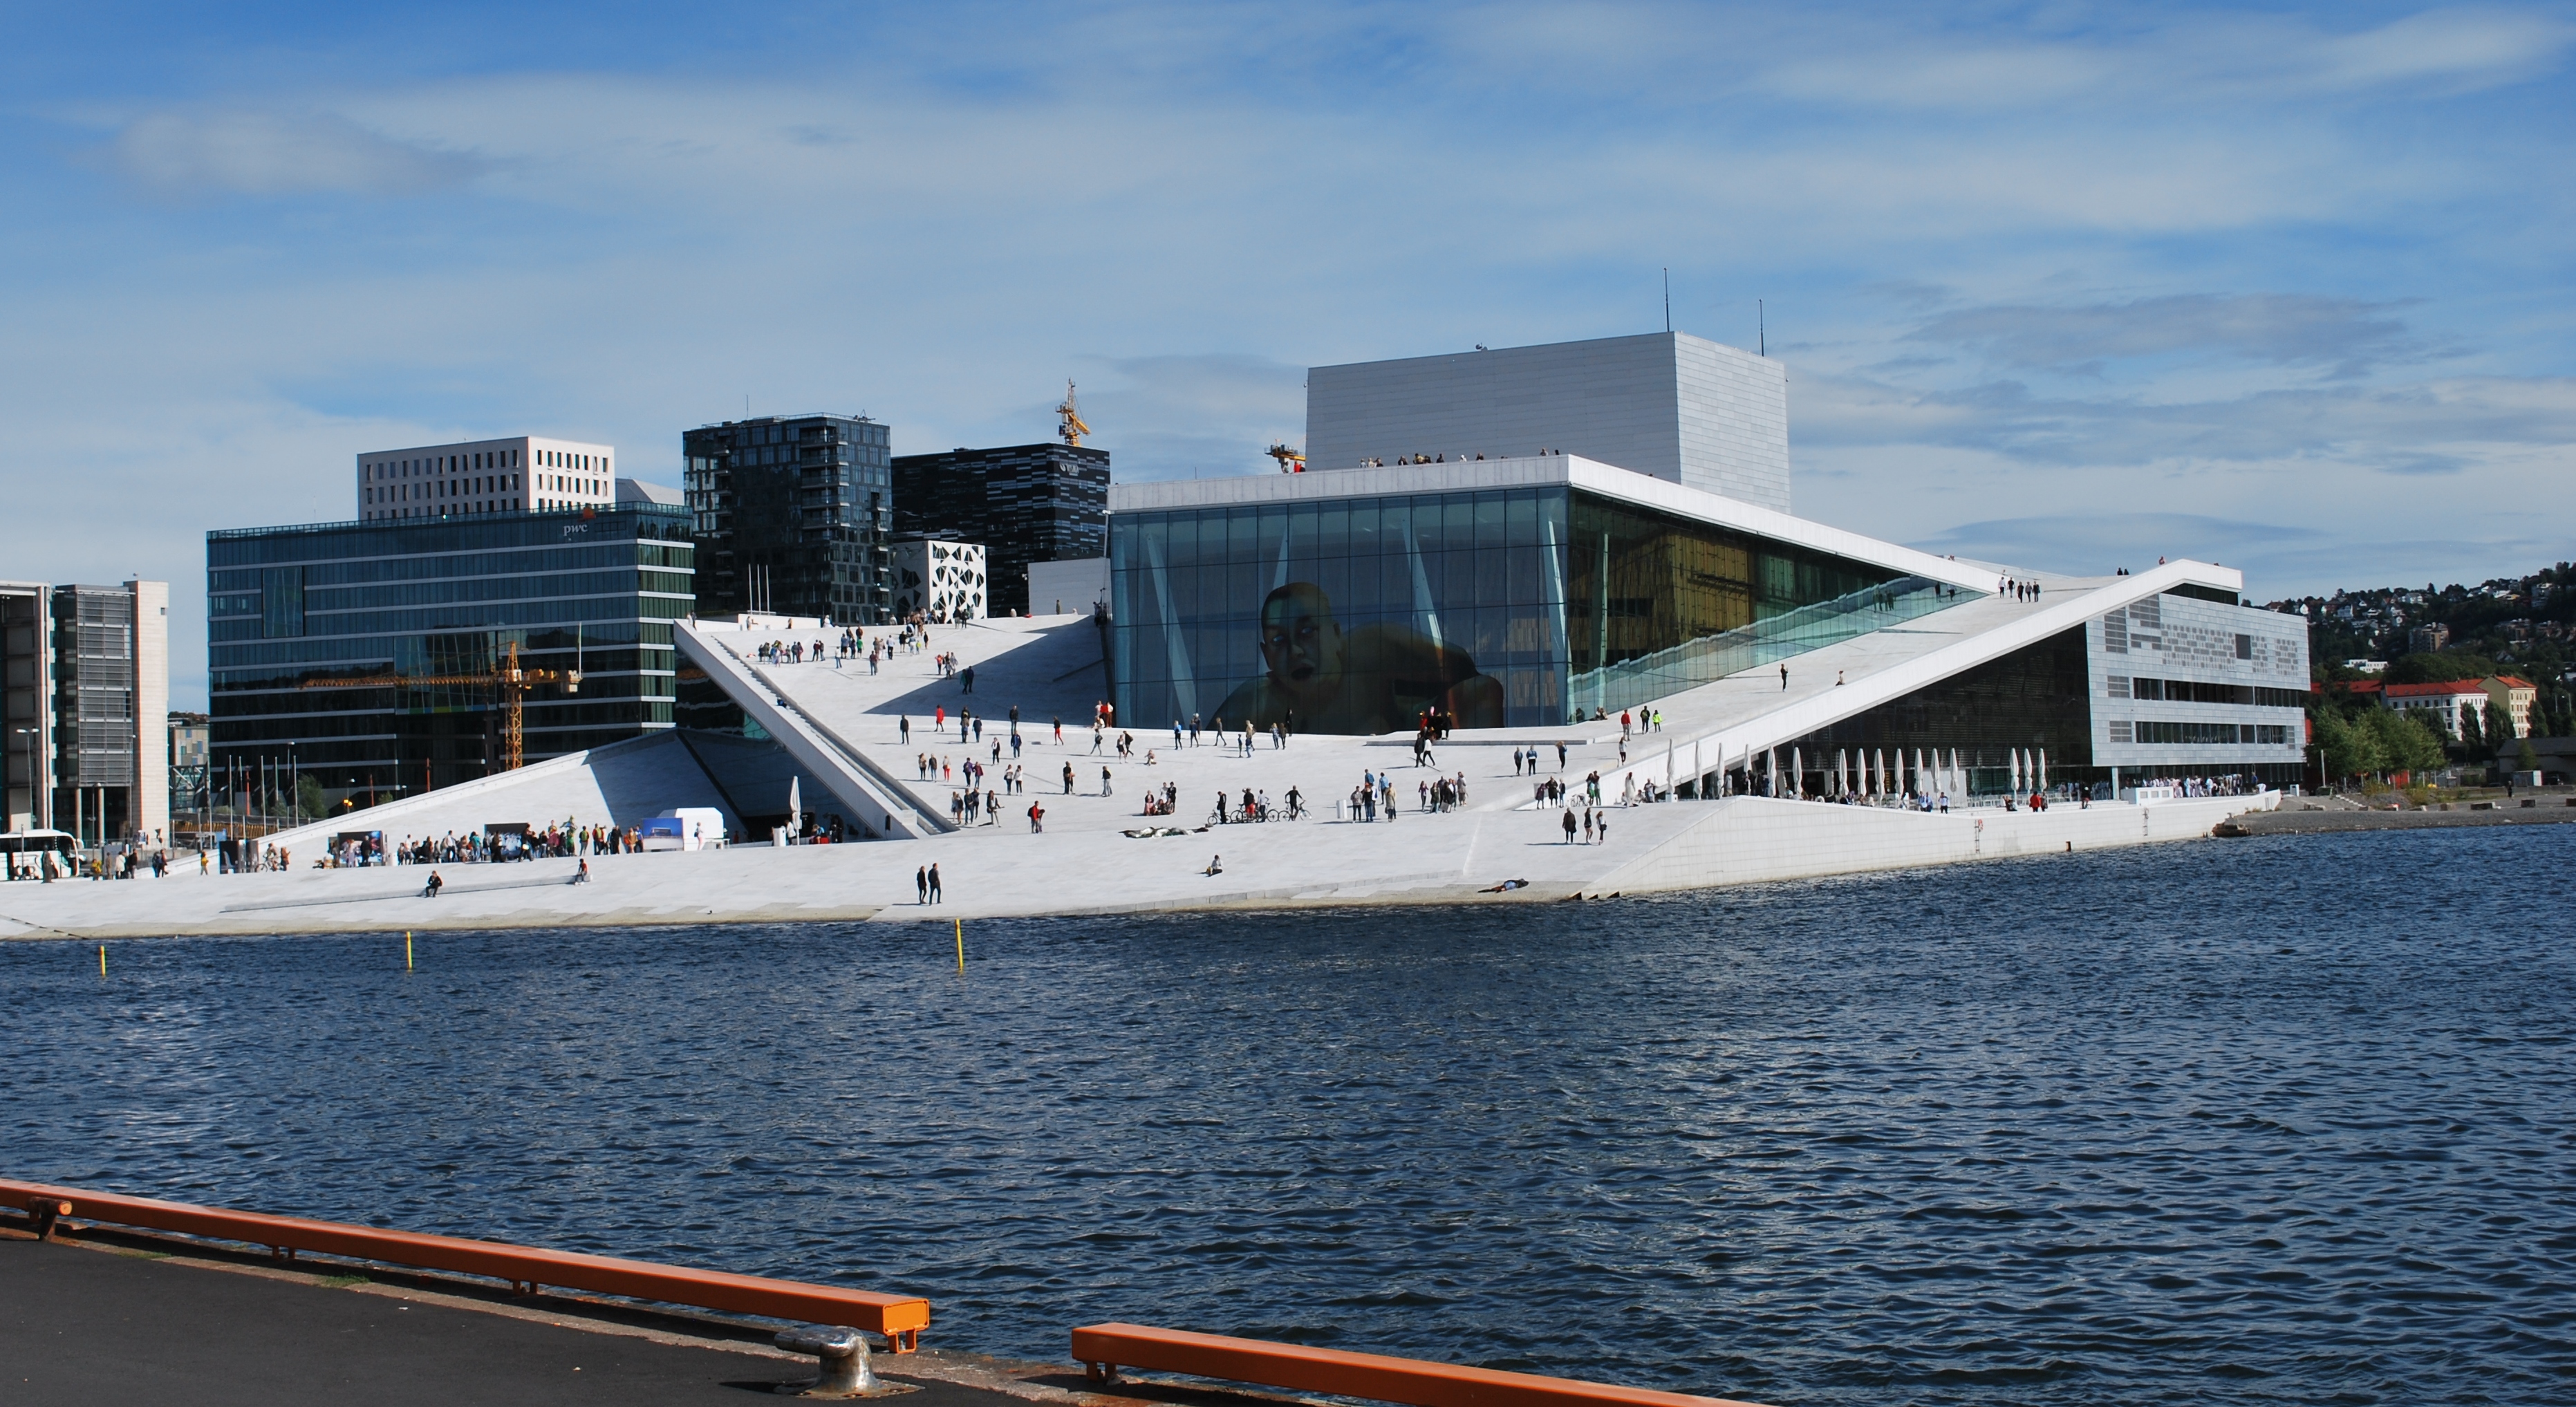 File:Oslo Opera House seen from Langkaia.JPG - Wikimedia Commons